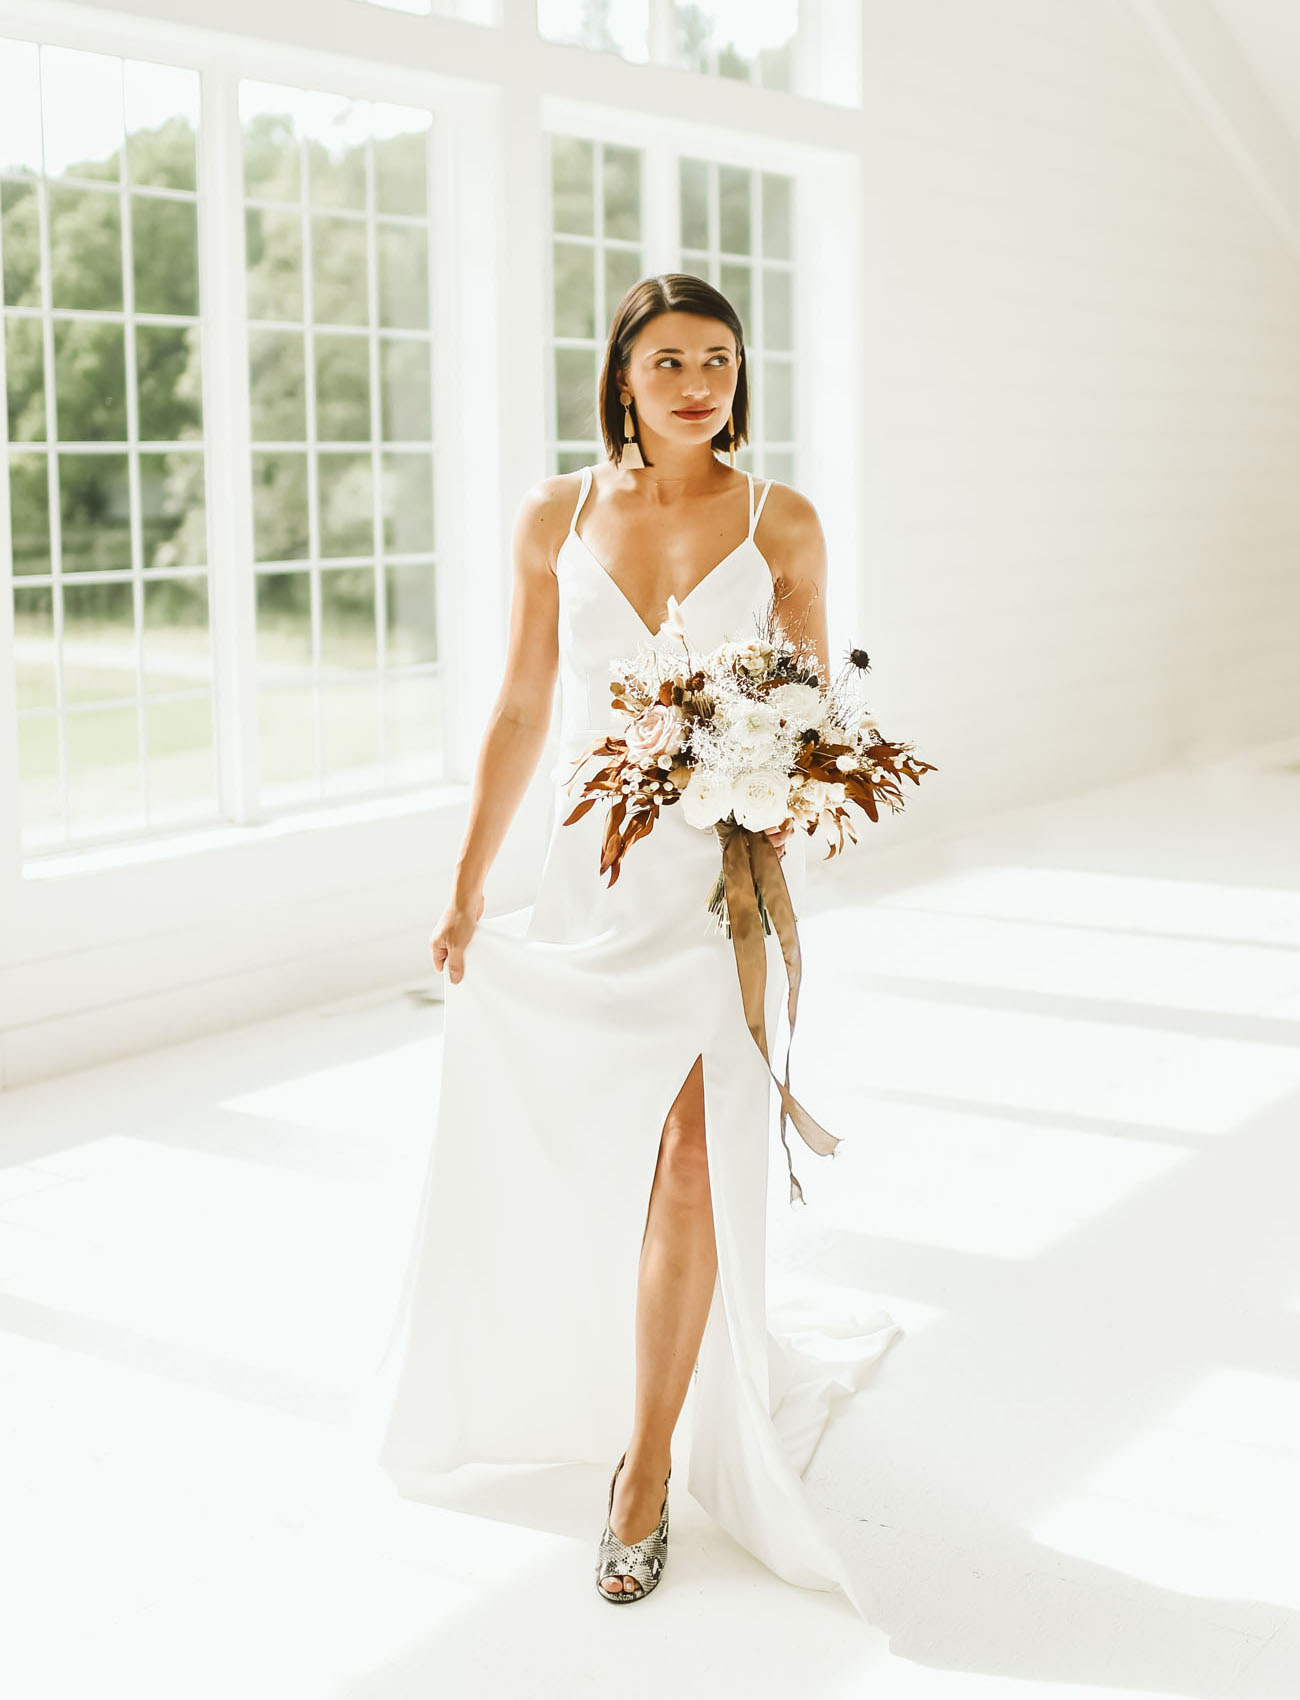 The bride was wearing a sleek minimalist wedding dress, bold printed shoes, statement earrings and a sleek bob